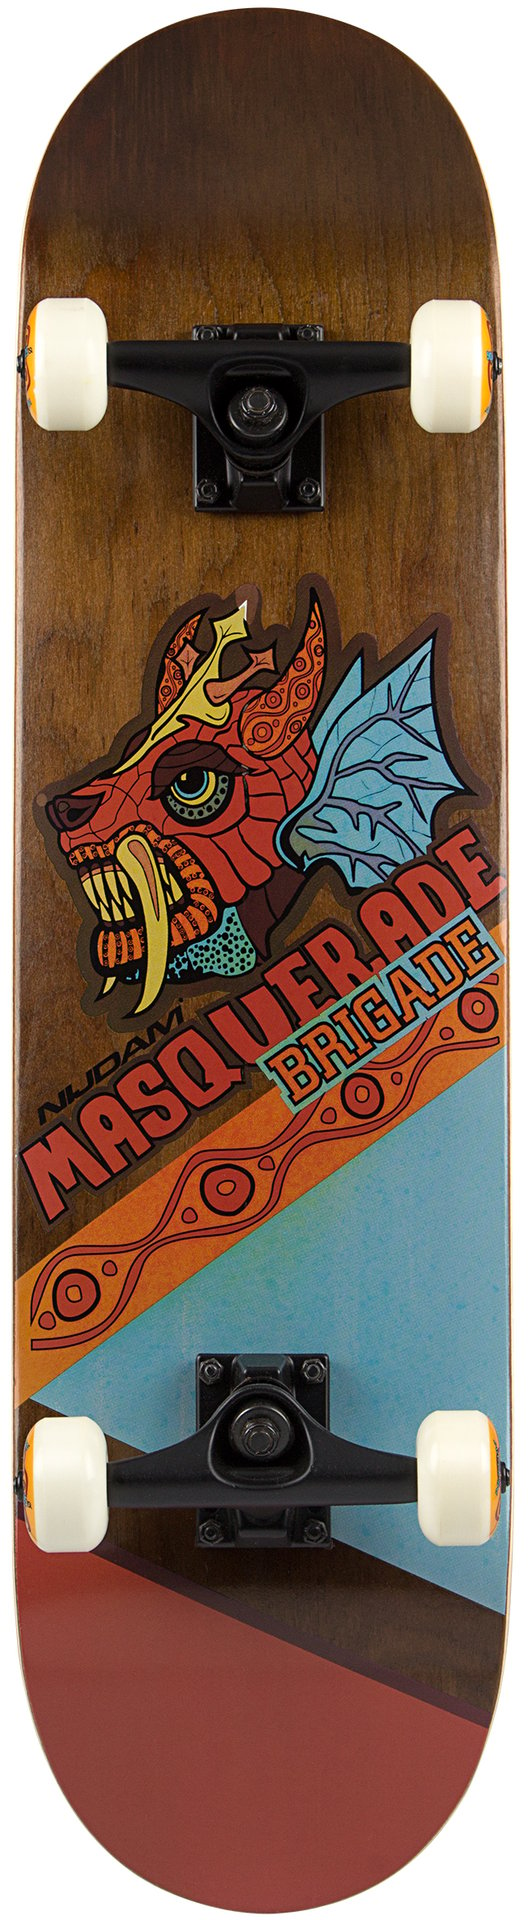 Skateboard • Masquerade Brigade •